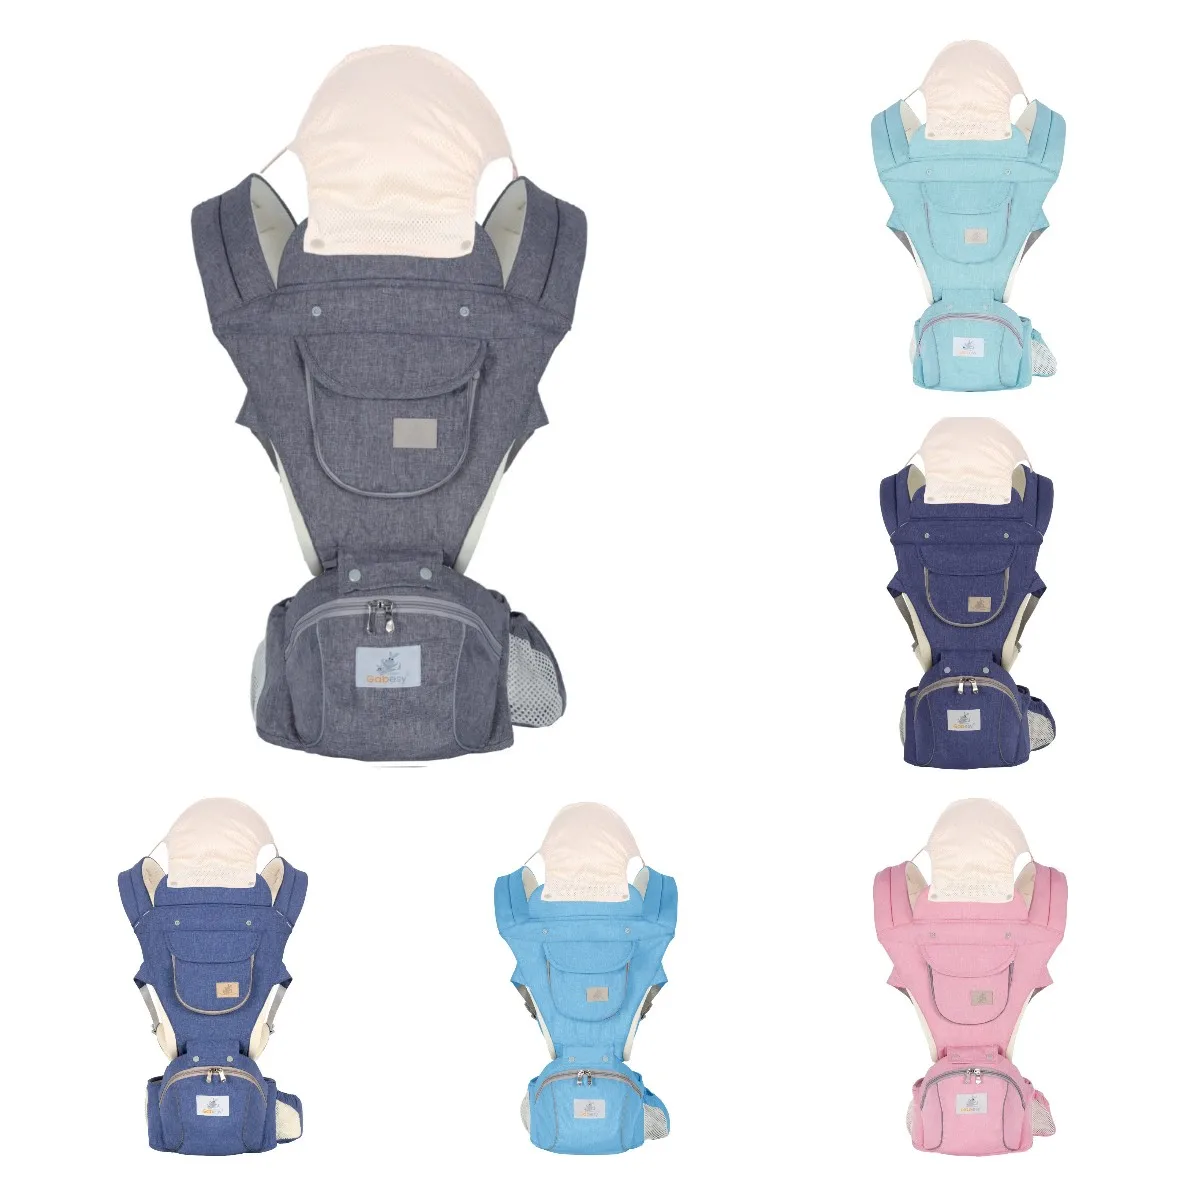 

Ergonomic New Born Baby Carrier Infant Kids Backpack Hipseat Sling Front Facing Kangaroo Babys Wrap For Infan Travel 0-36 Months